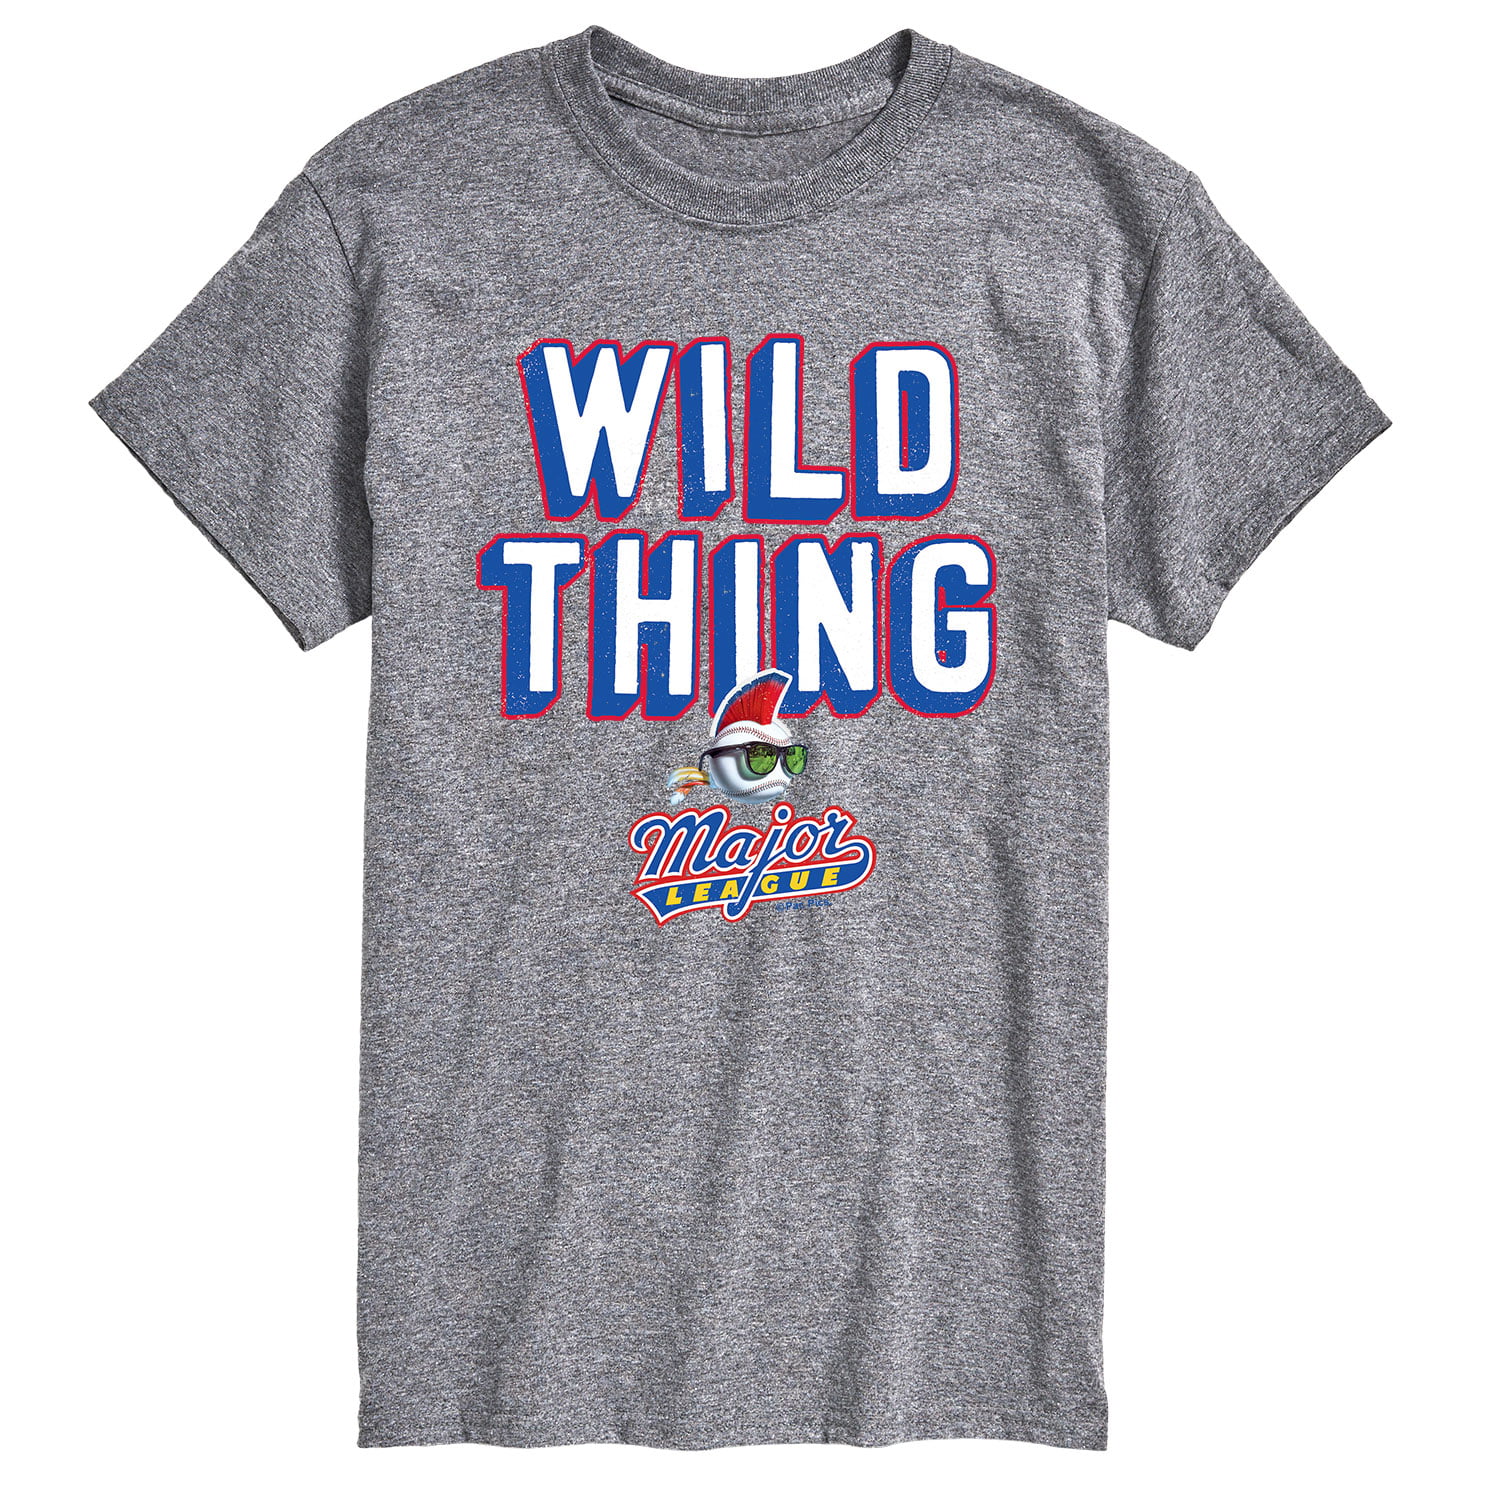 wild thing major league shirt